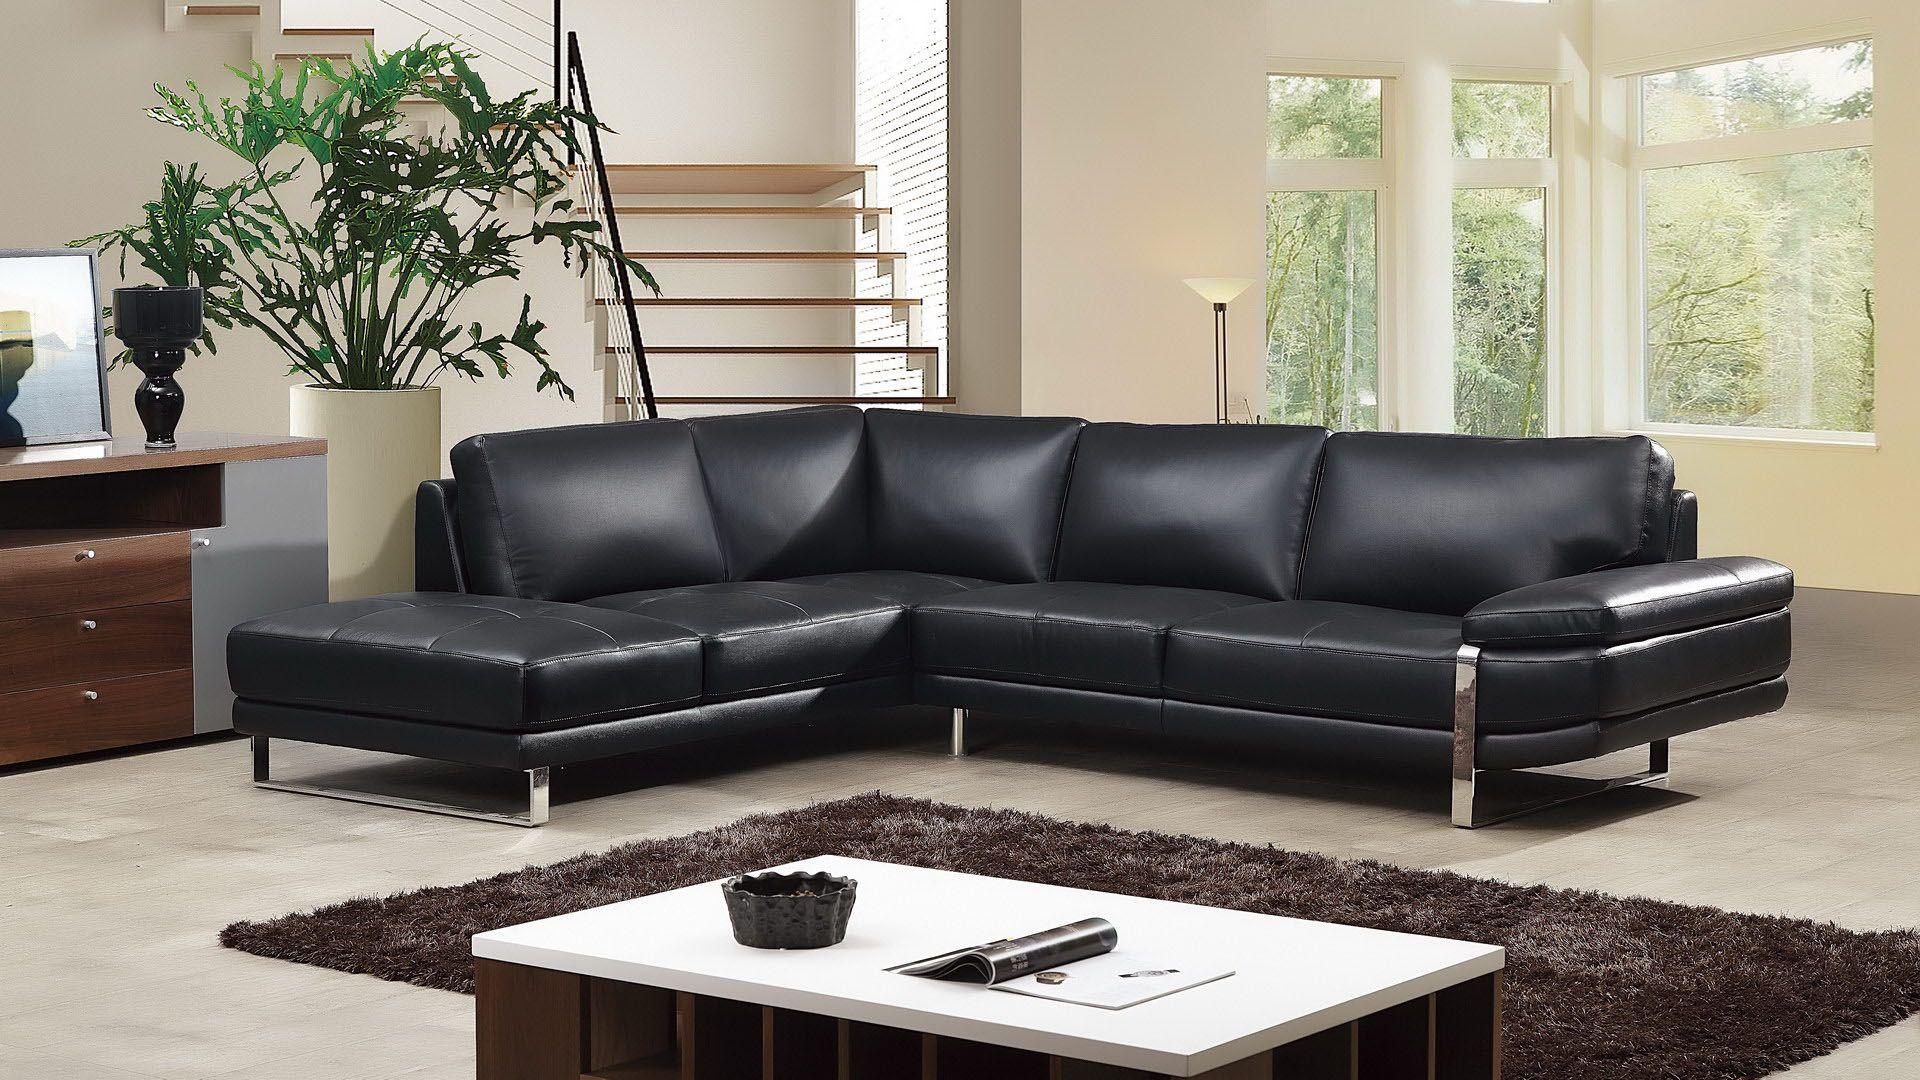 Contemporary, Modern Sectional Sofa EK-L025-BK EK-L025L-BK in Black Italian Leather